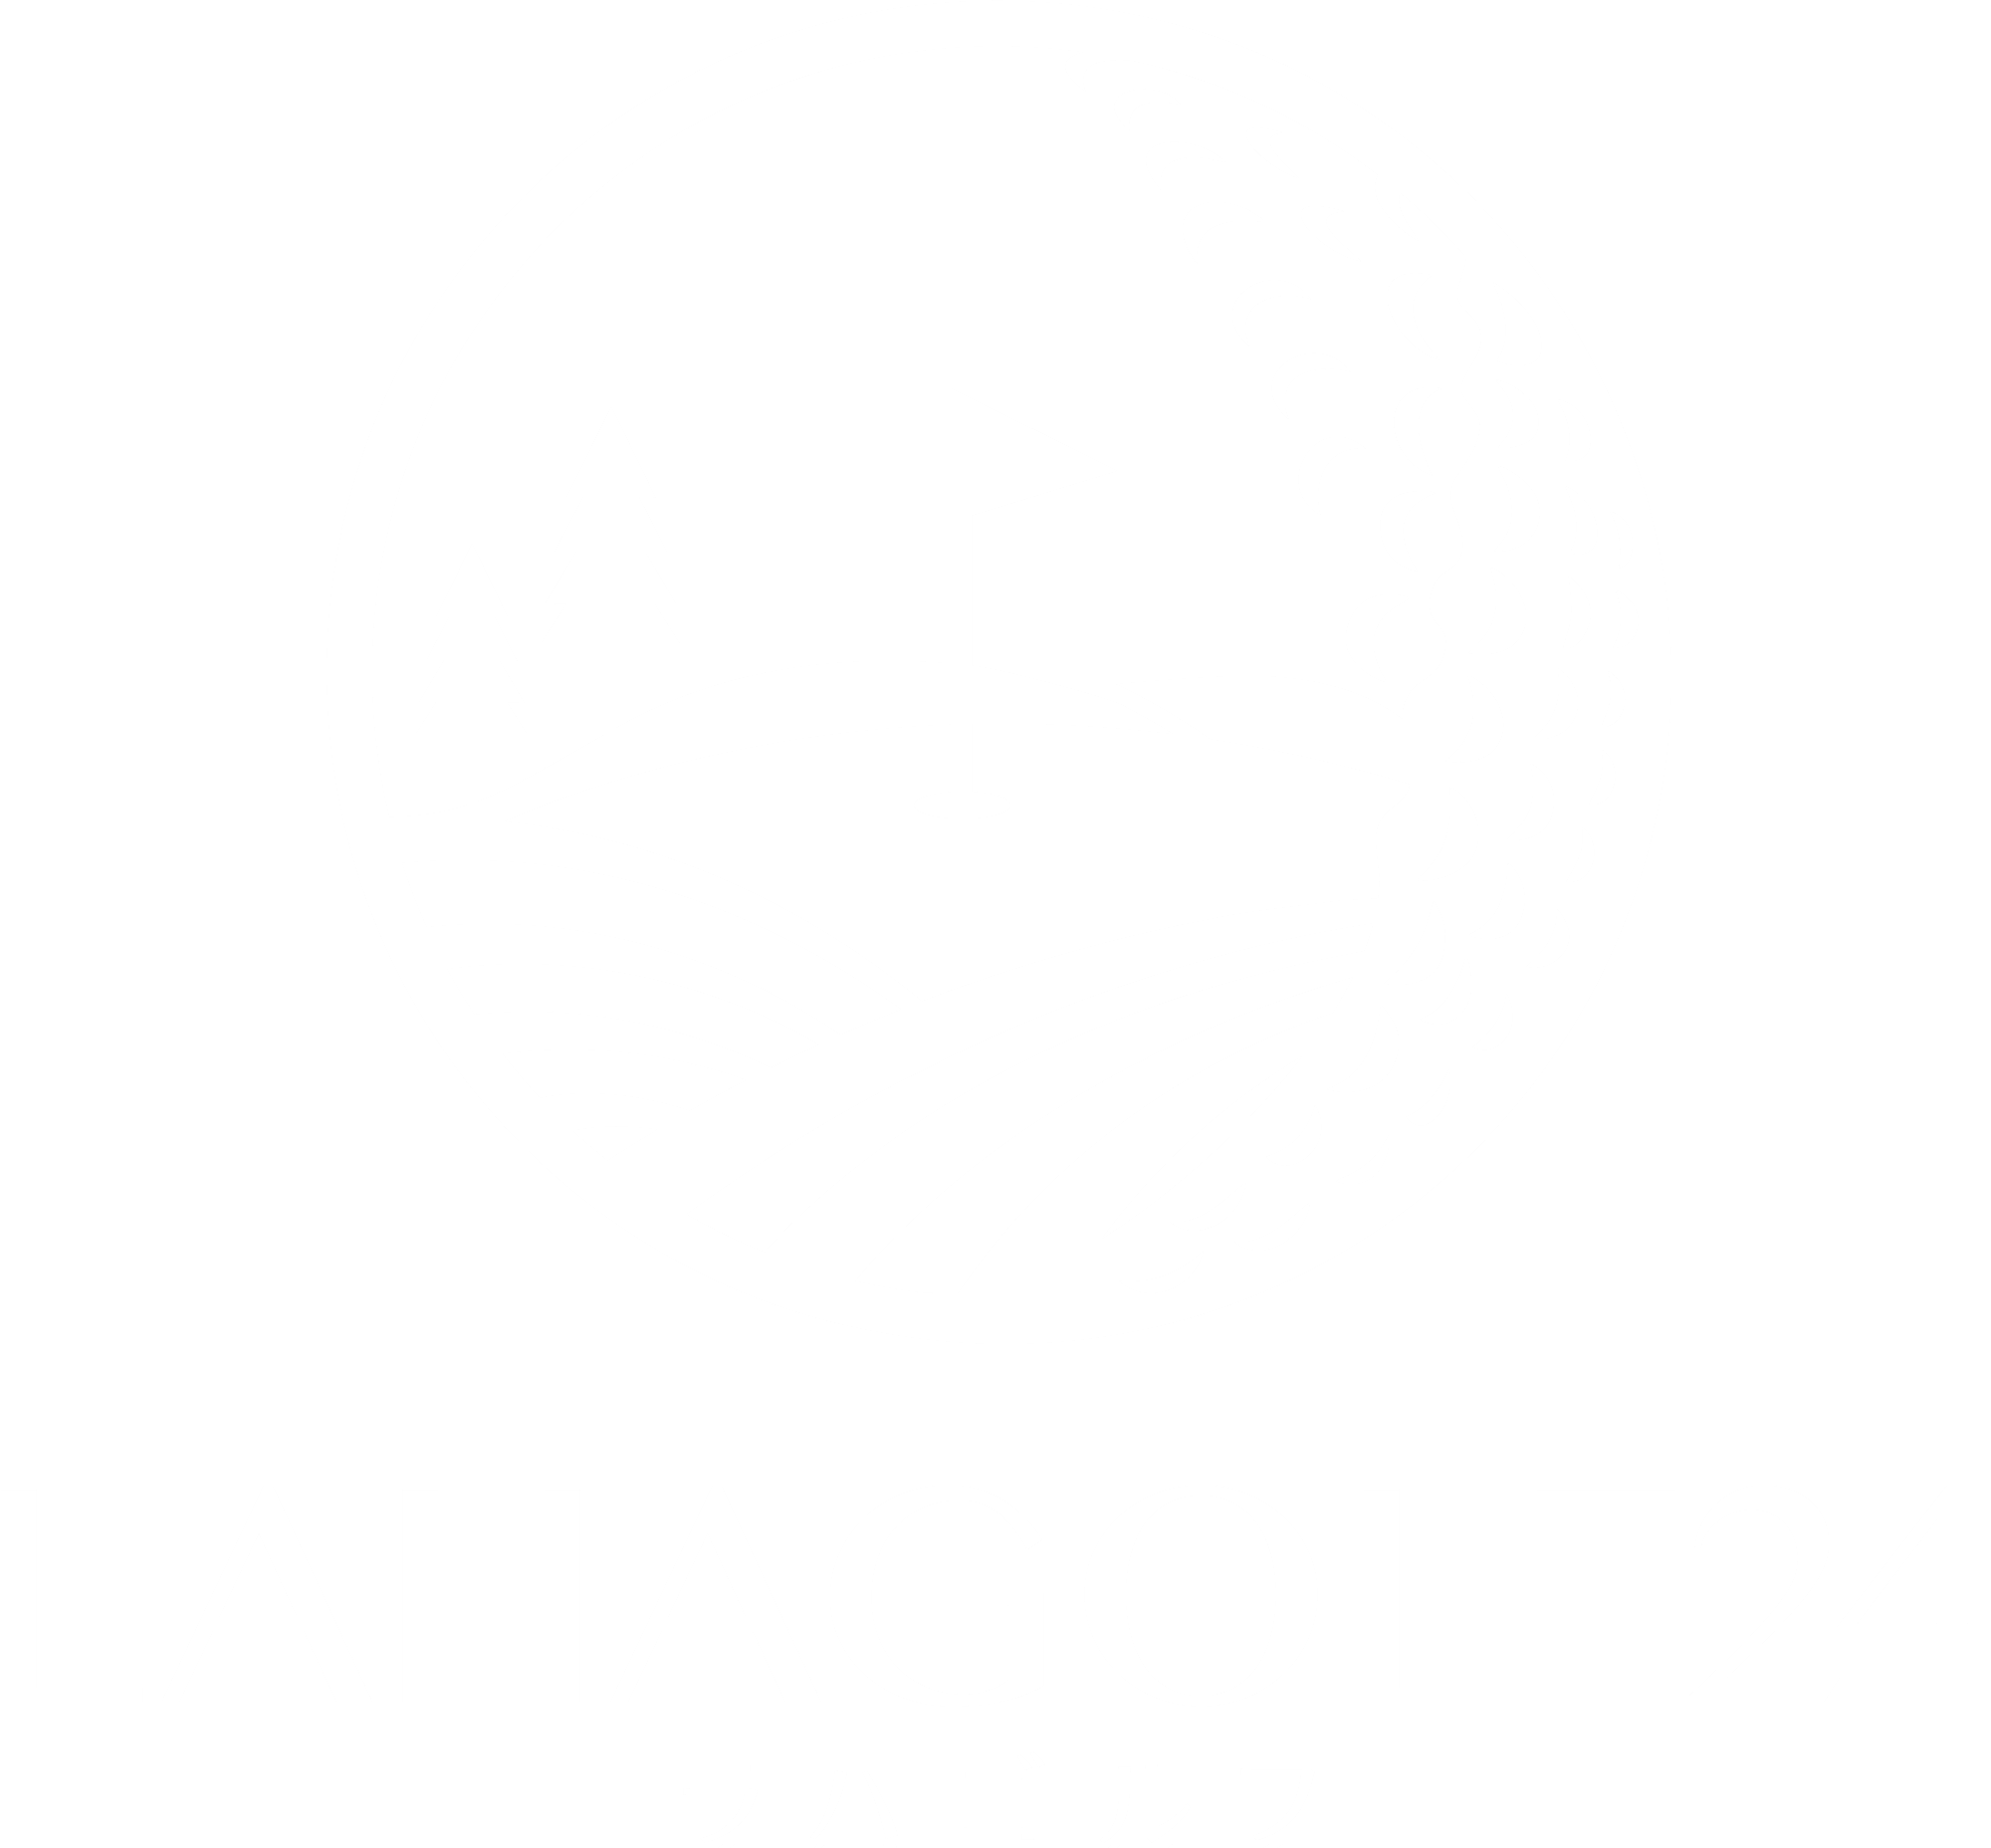 LAHAGOLF24